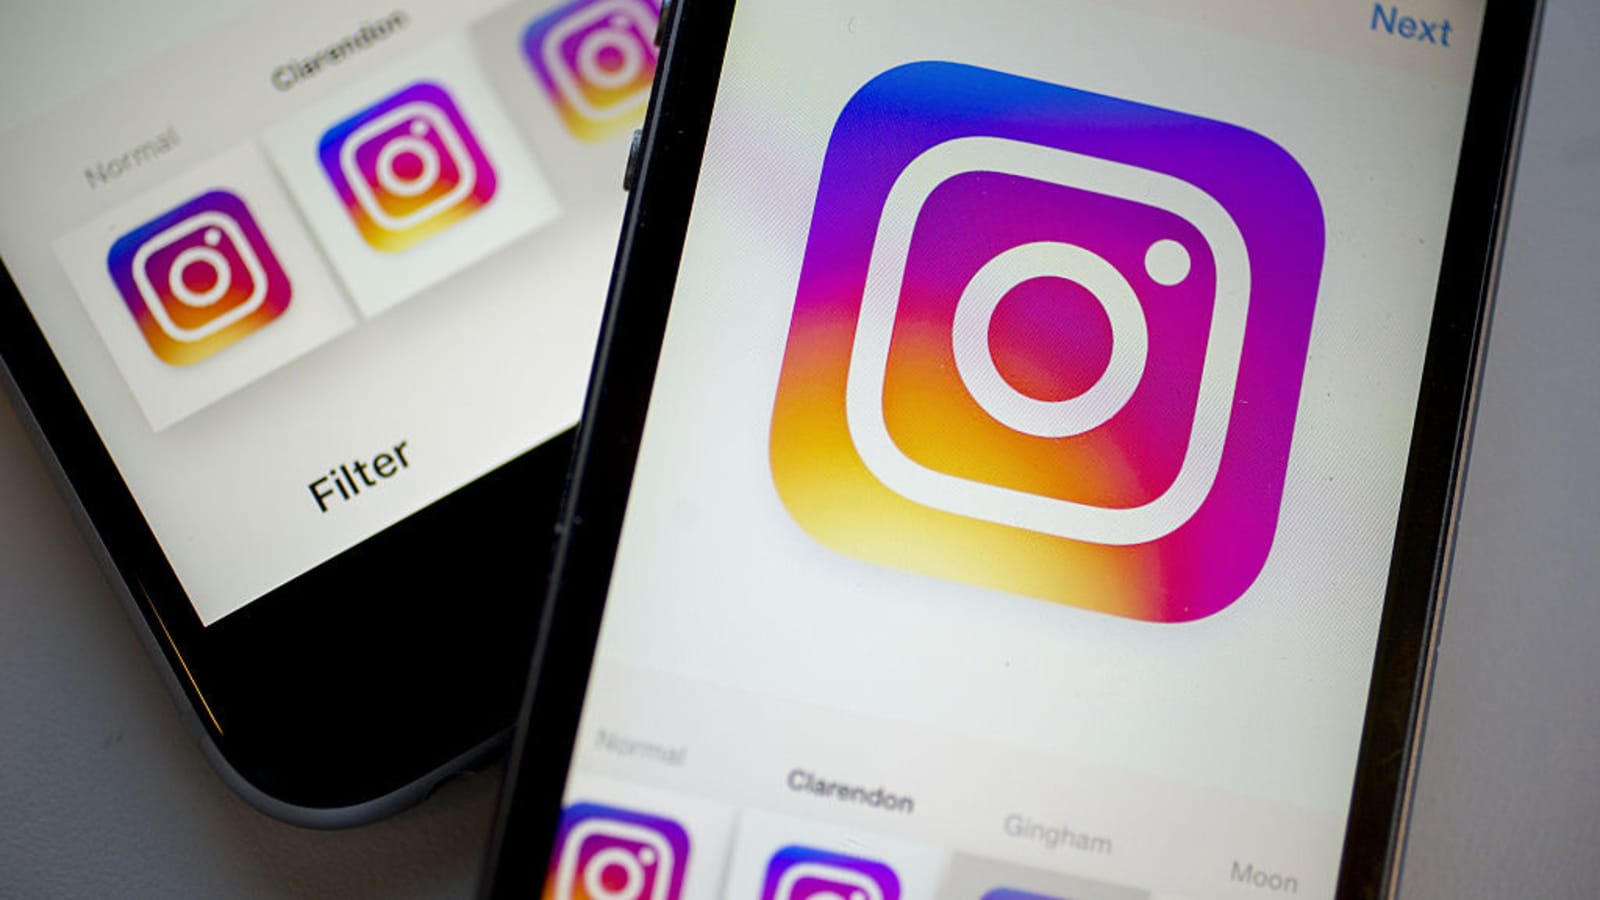 Facebook finally launches Instagram Lite